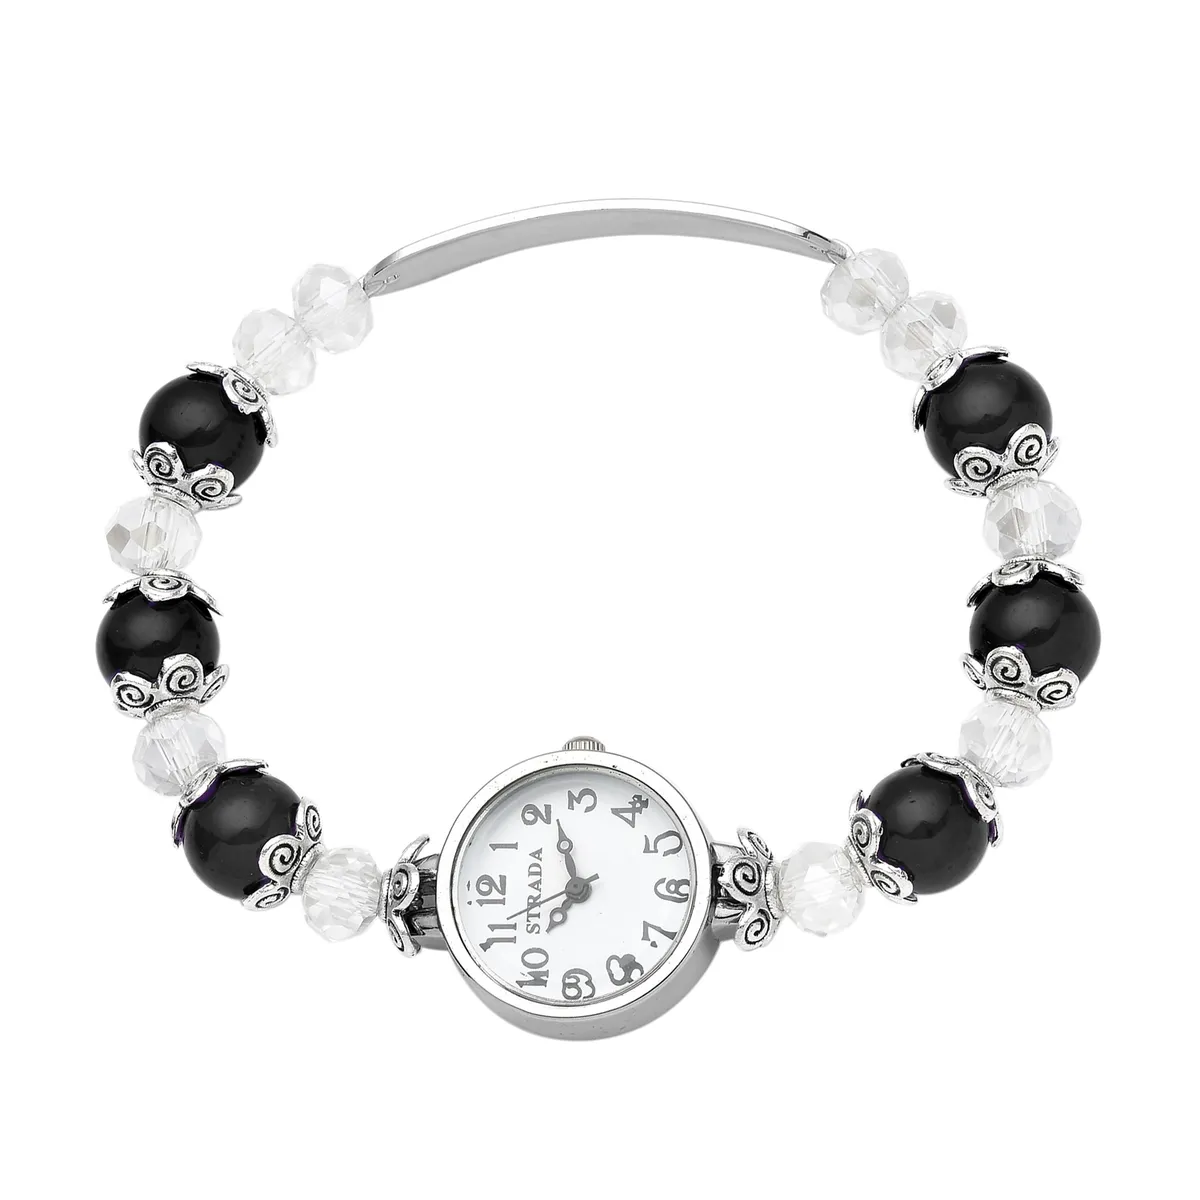 Beaded Bracelet Watch with Medical Alert